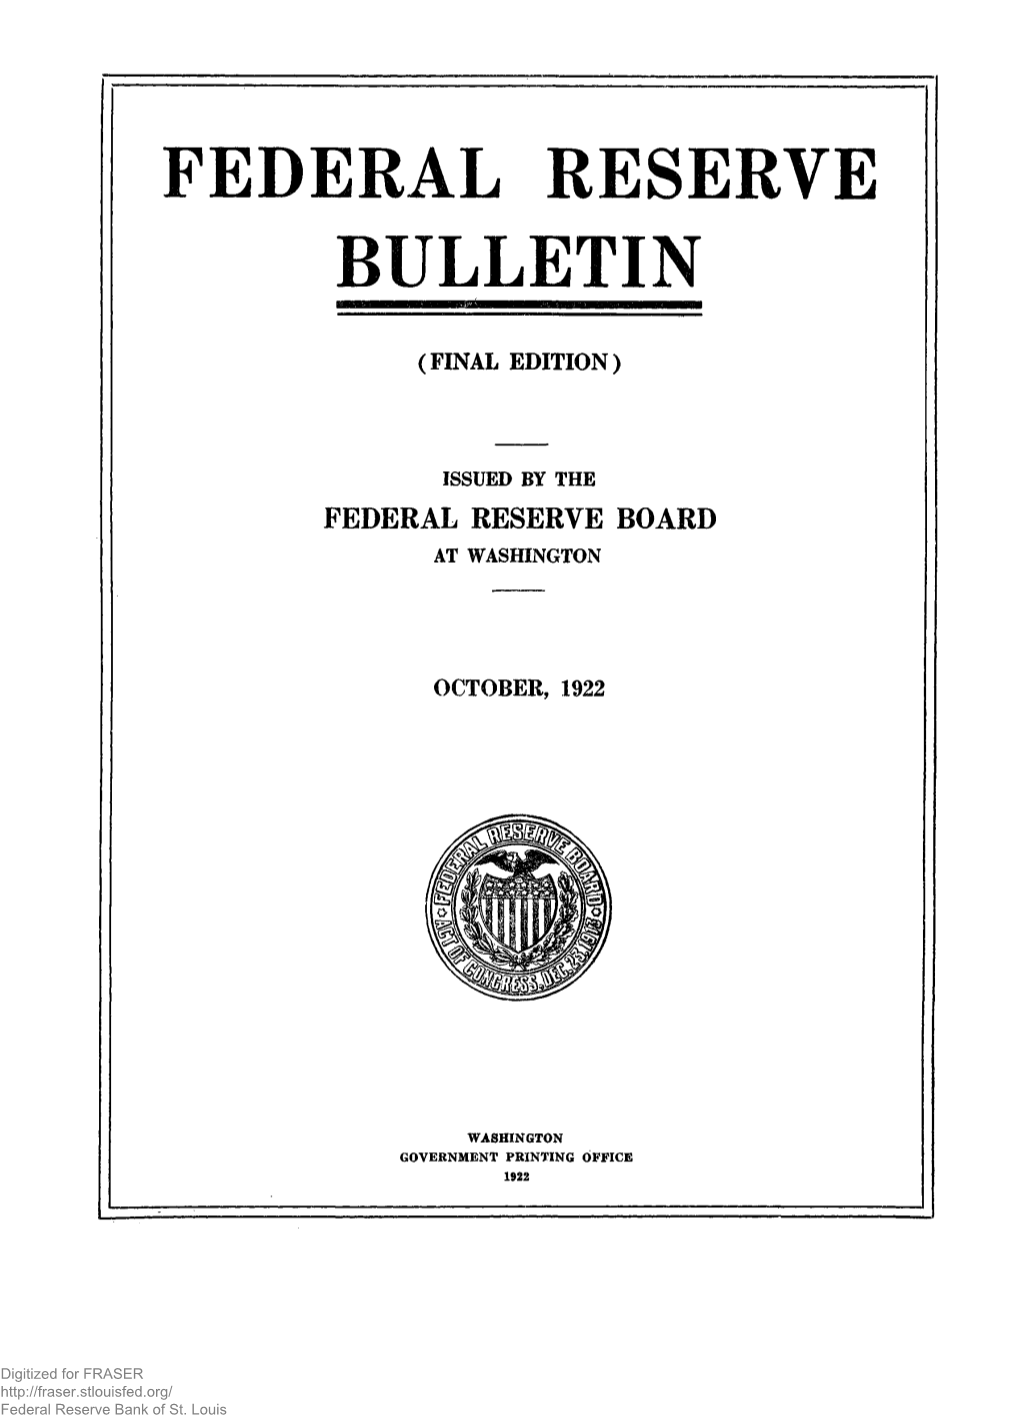 Federal Reserve Bulletin October 1922